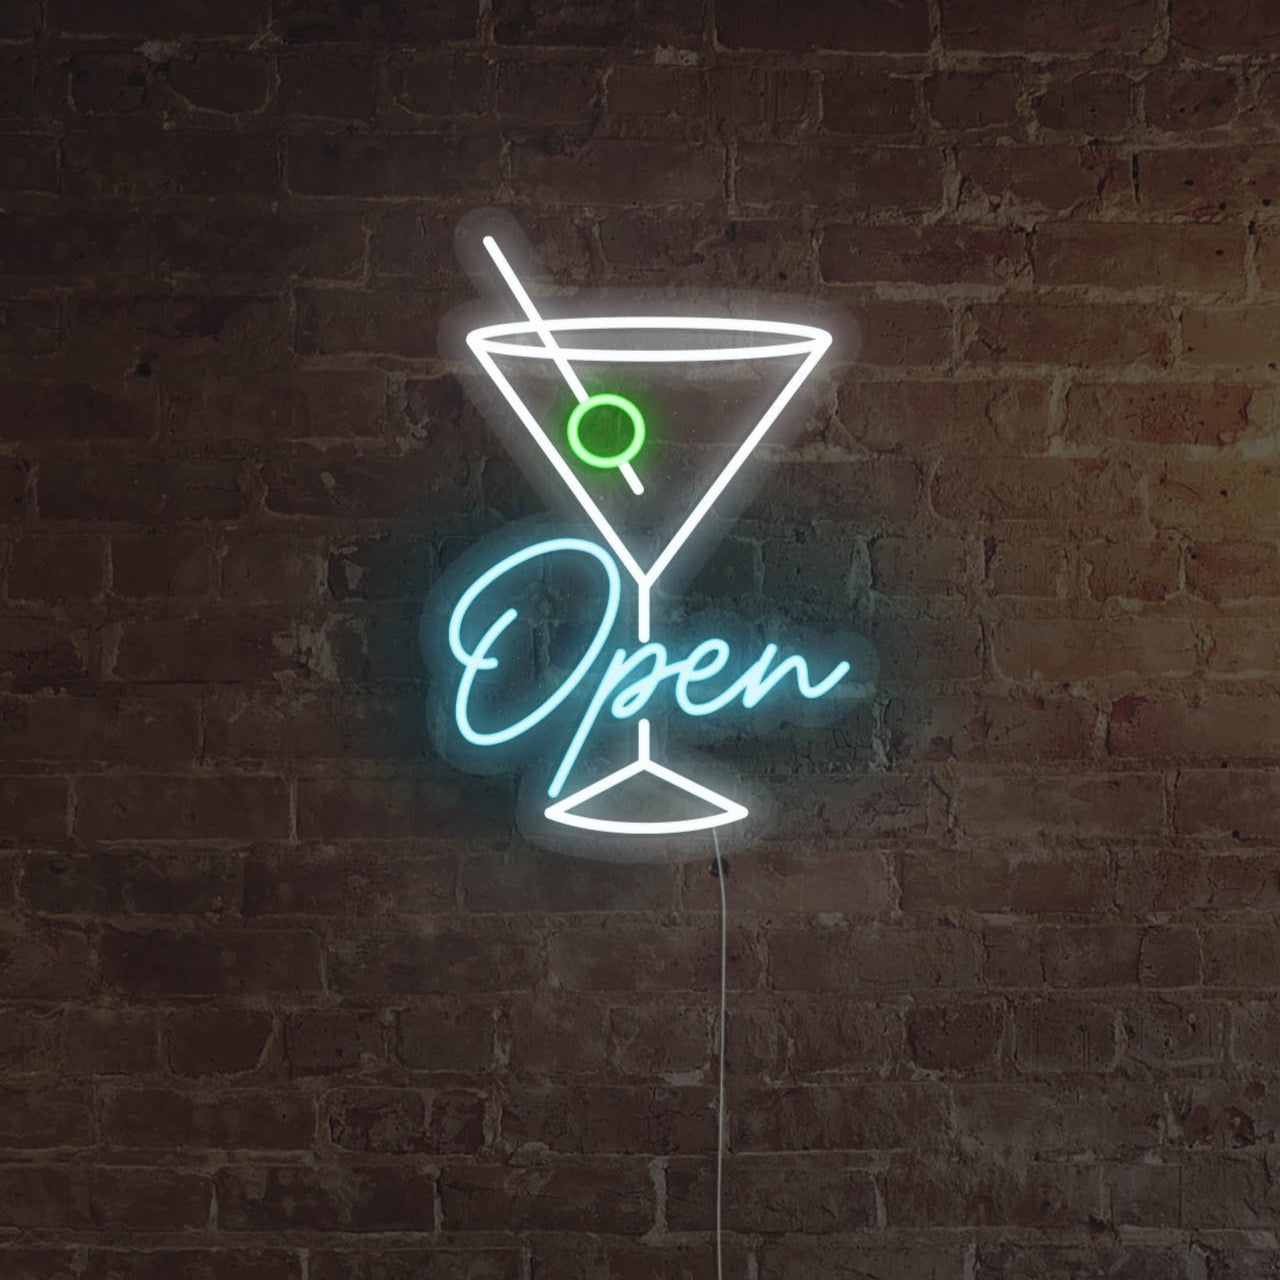 Bar Open LED Neon Sign